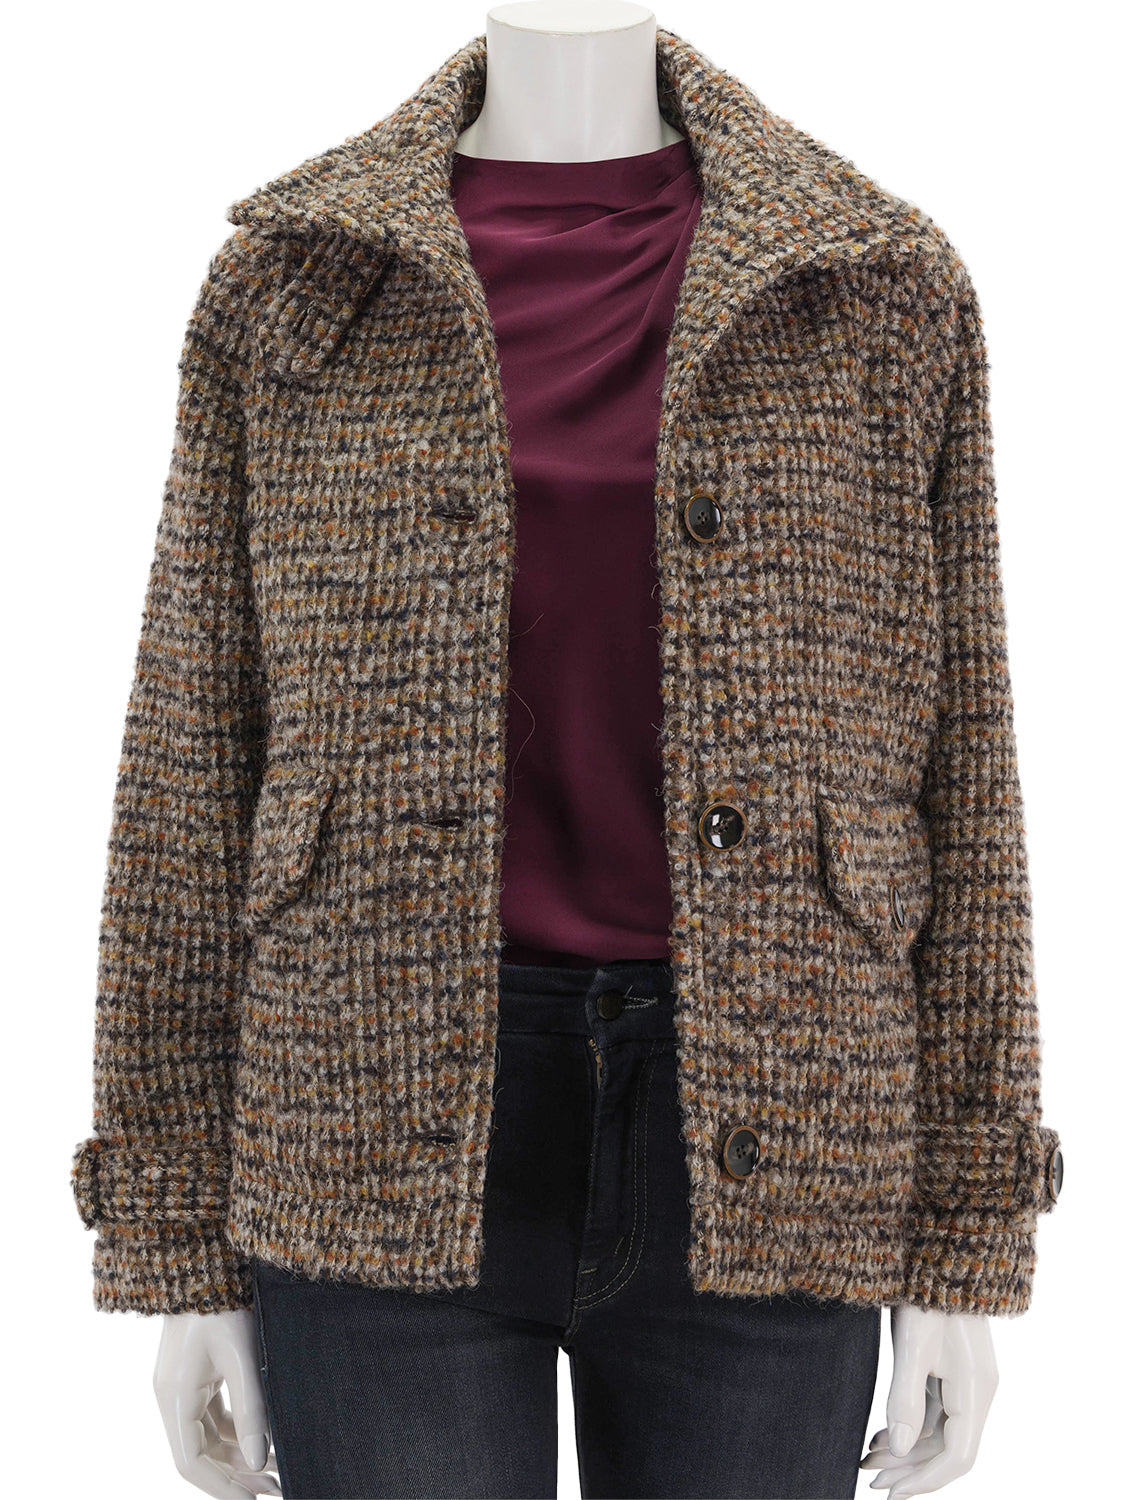 lee valley jacket in covent tweed – Twigs